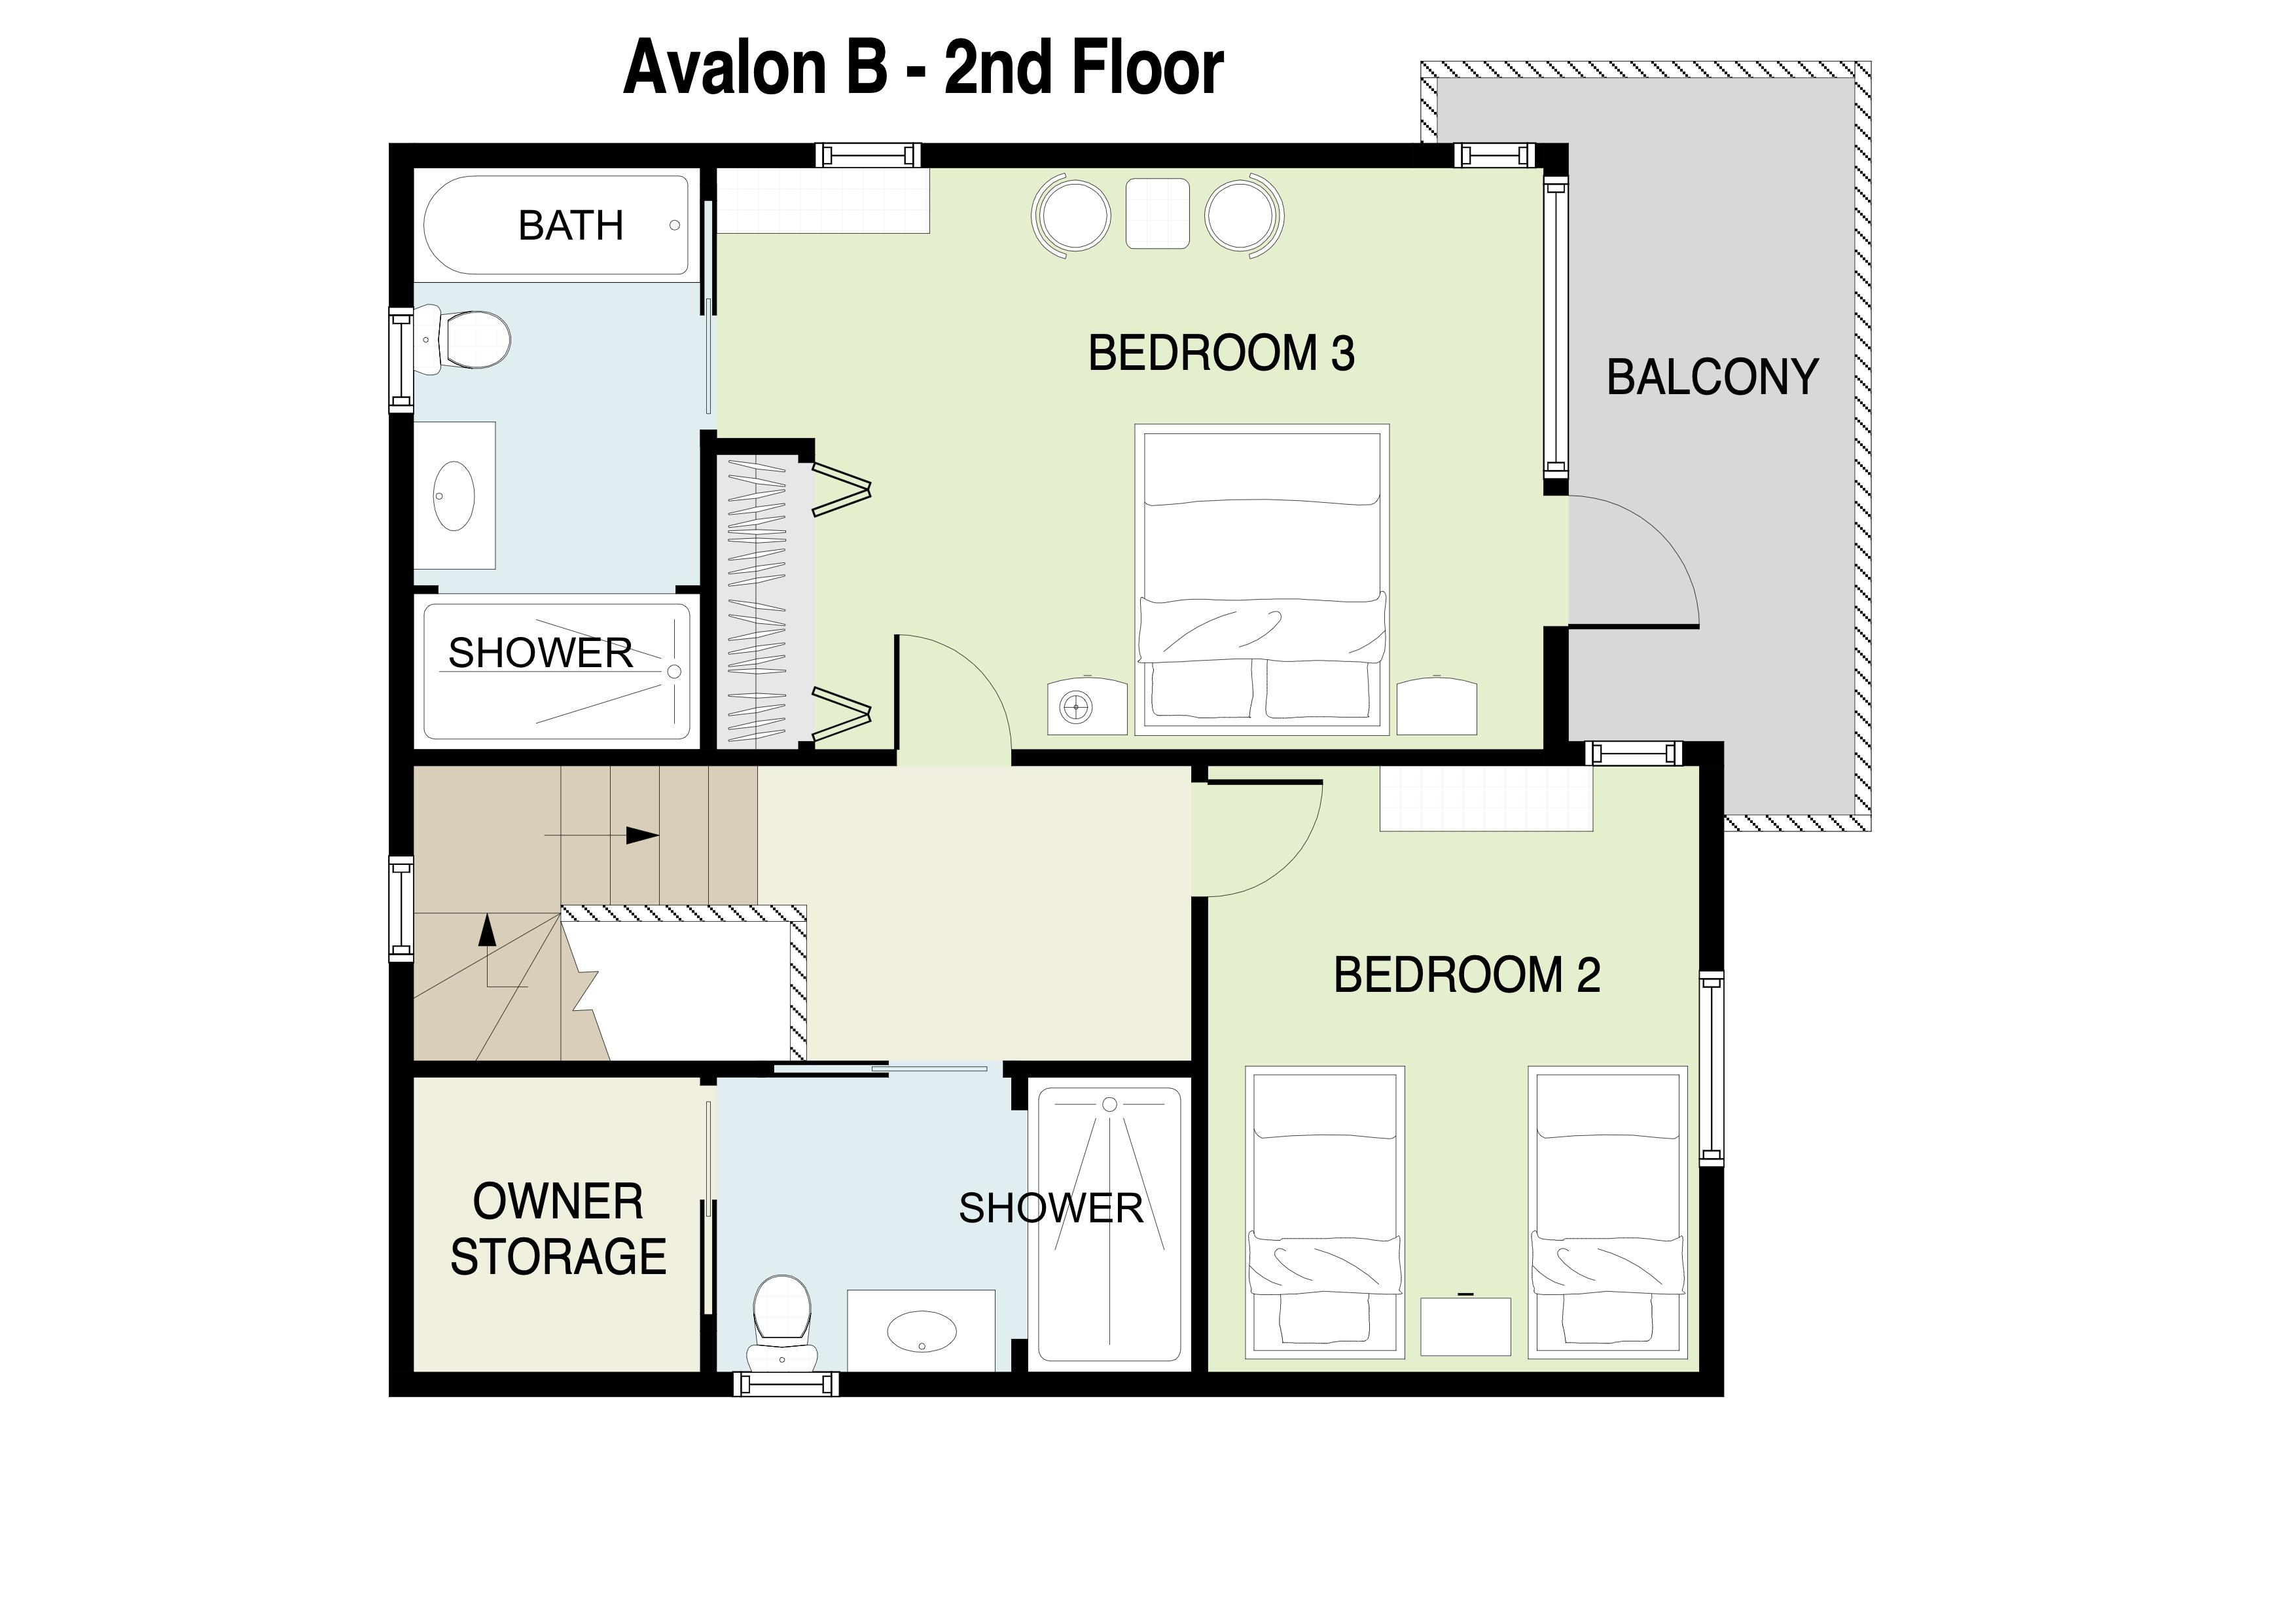 Avalon B 2nd floor plans